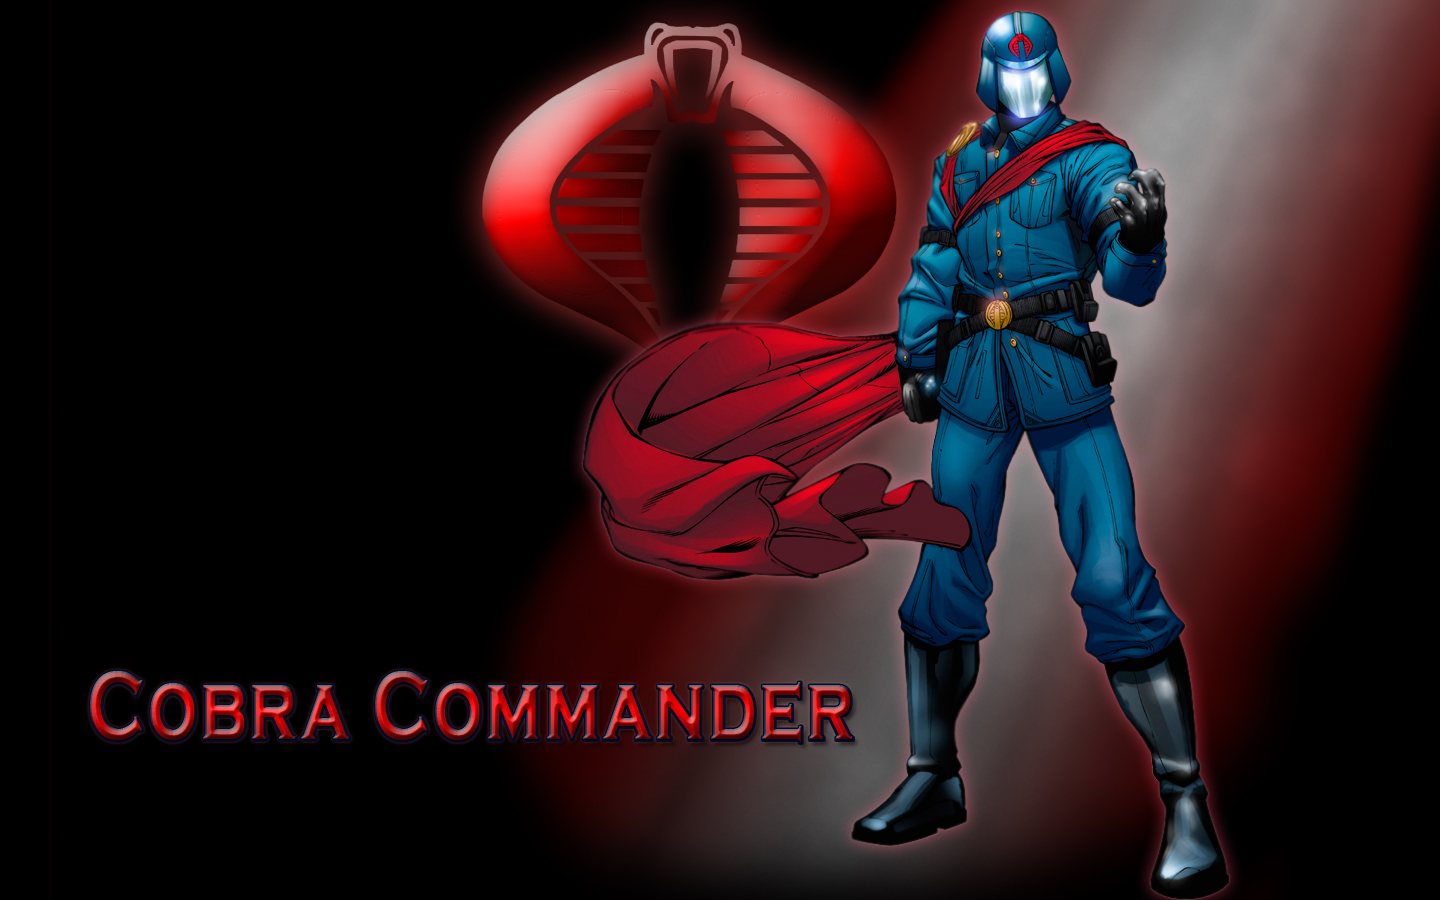 562182 Hintergrundbild herunterladen comics, action force: die neuen helden, cobra kommandant - Bildschirmschoner und Bilder kostenlos